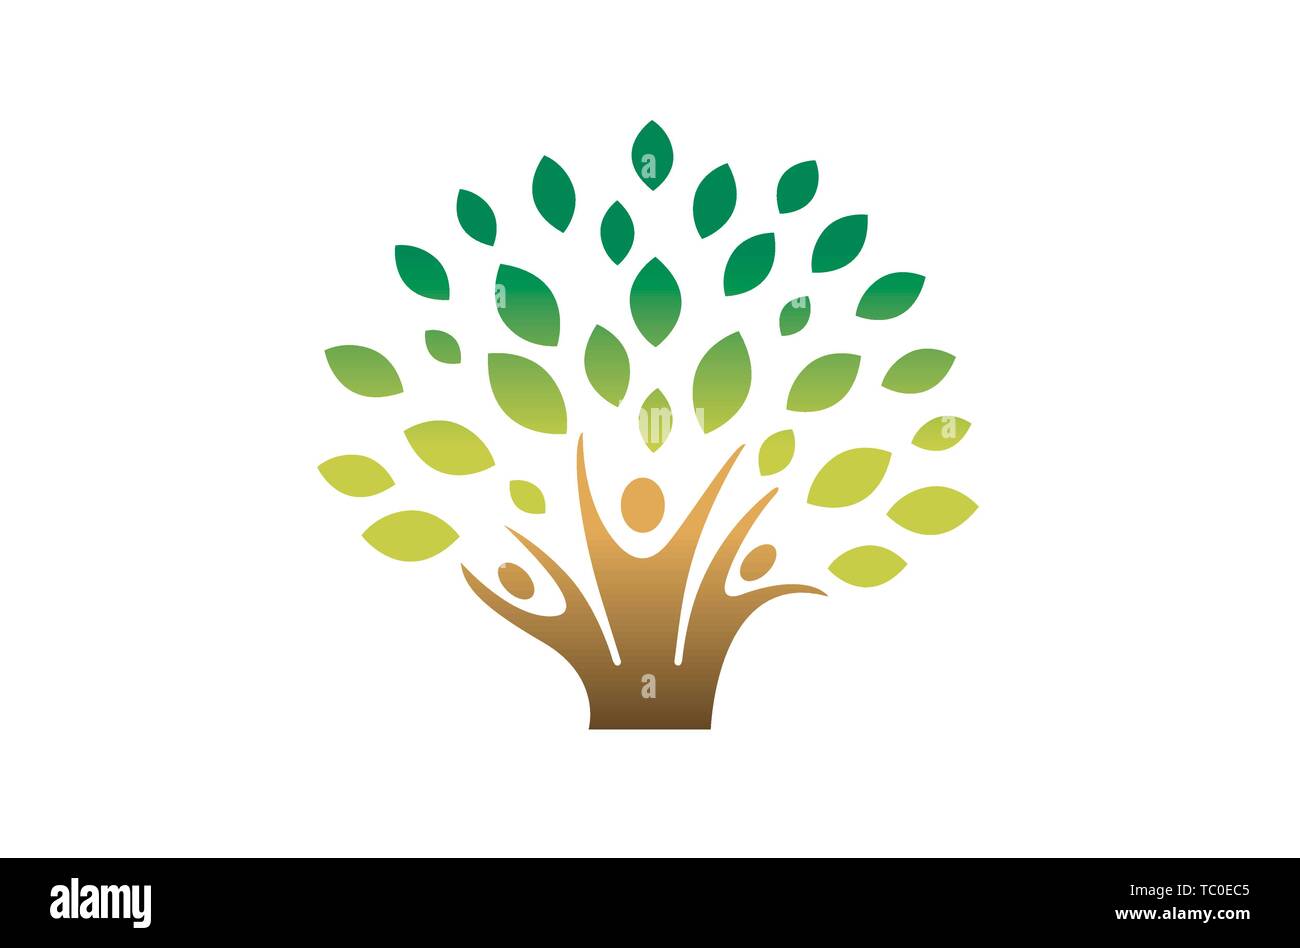 Creative People Tree Logo Design Illustration Stock Vector